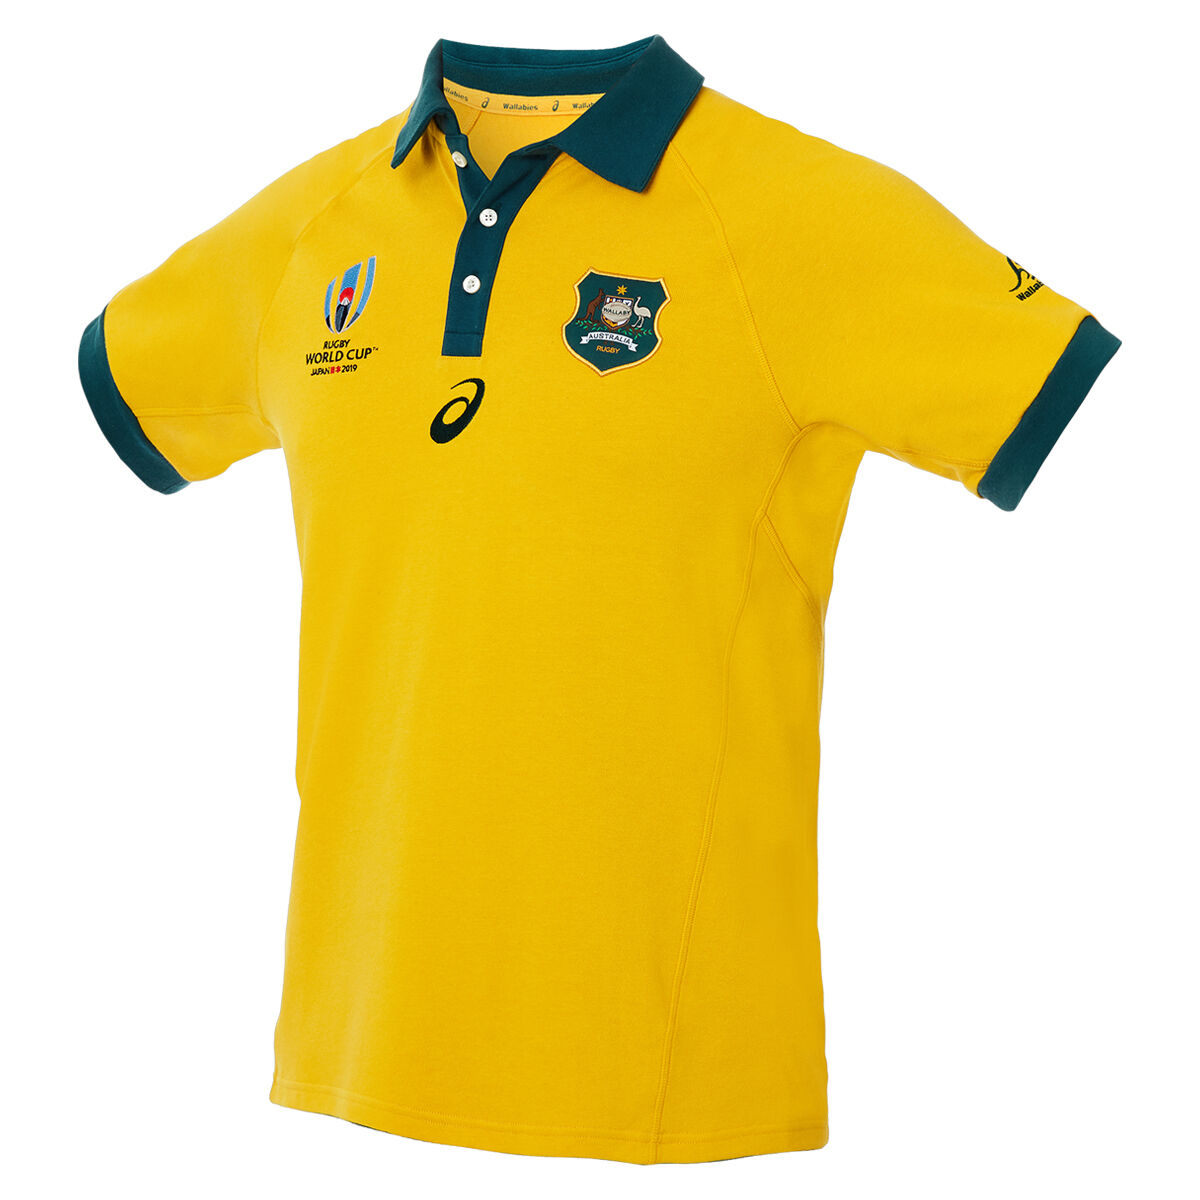 2019 world cup australia jersey